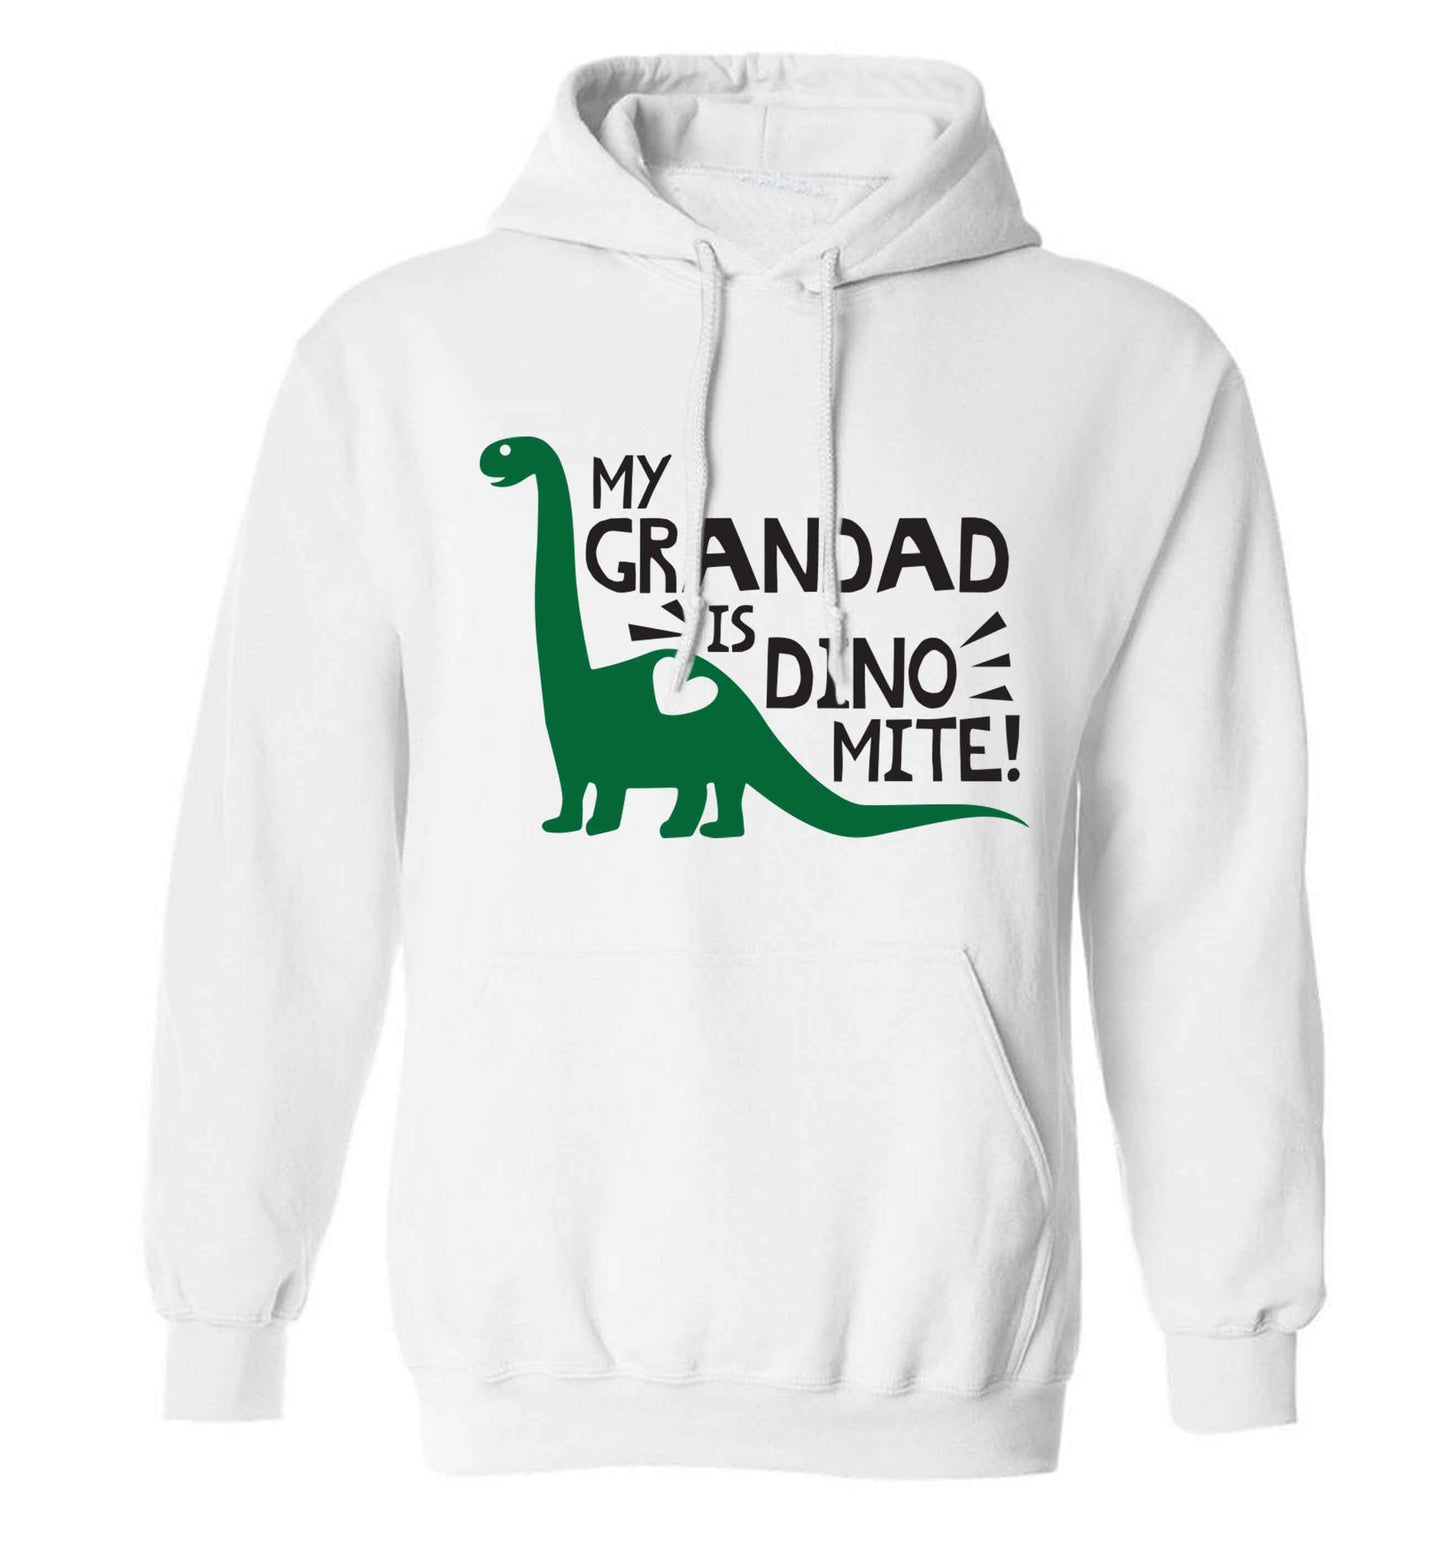 My grandad is dinomite! adults unisex white hoodie 2XL